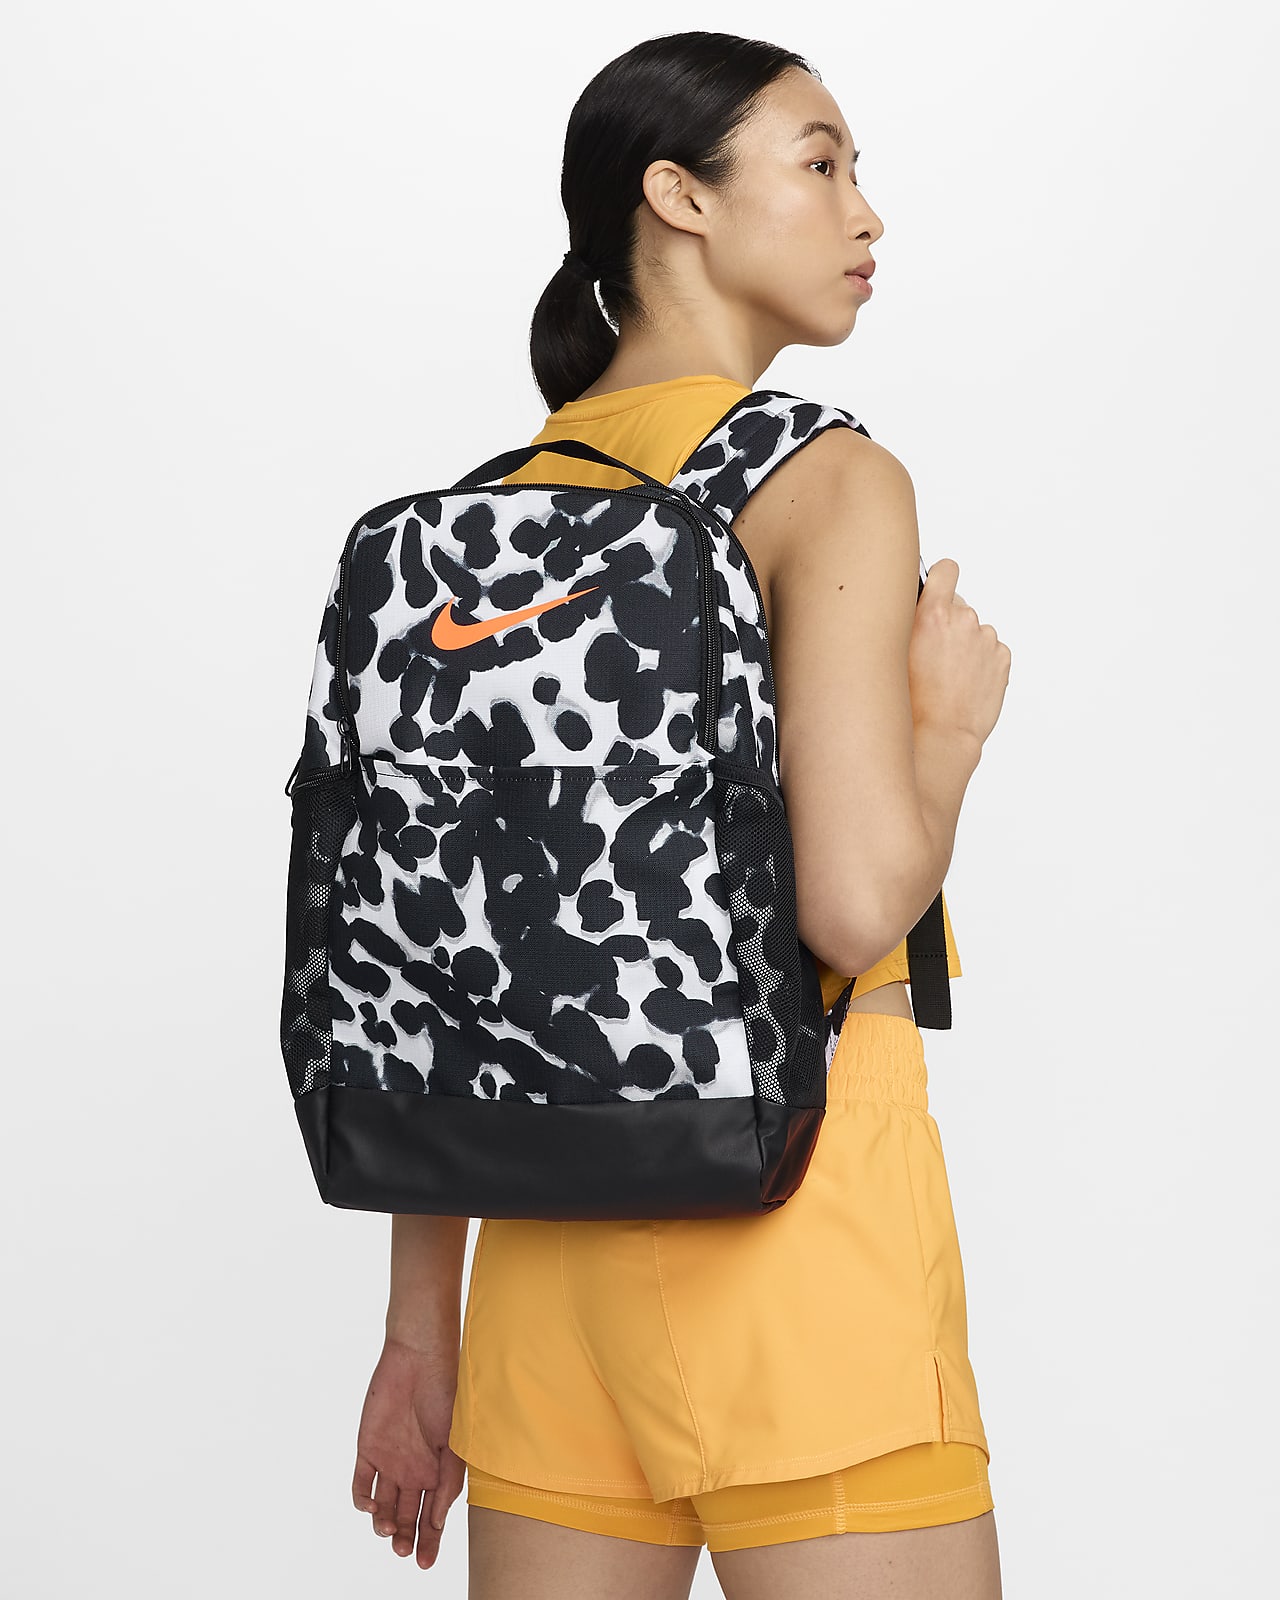 Plecak Nike Brasilia (rozmiar M, 24 l)